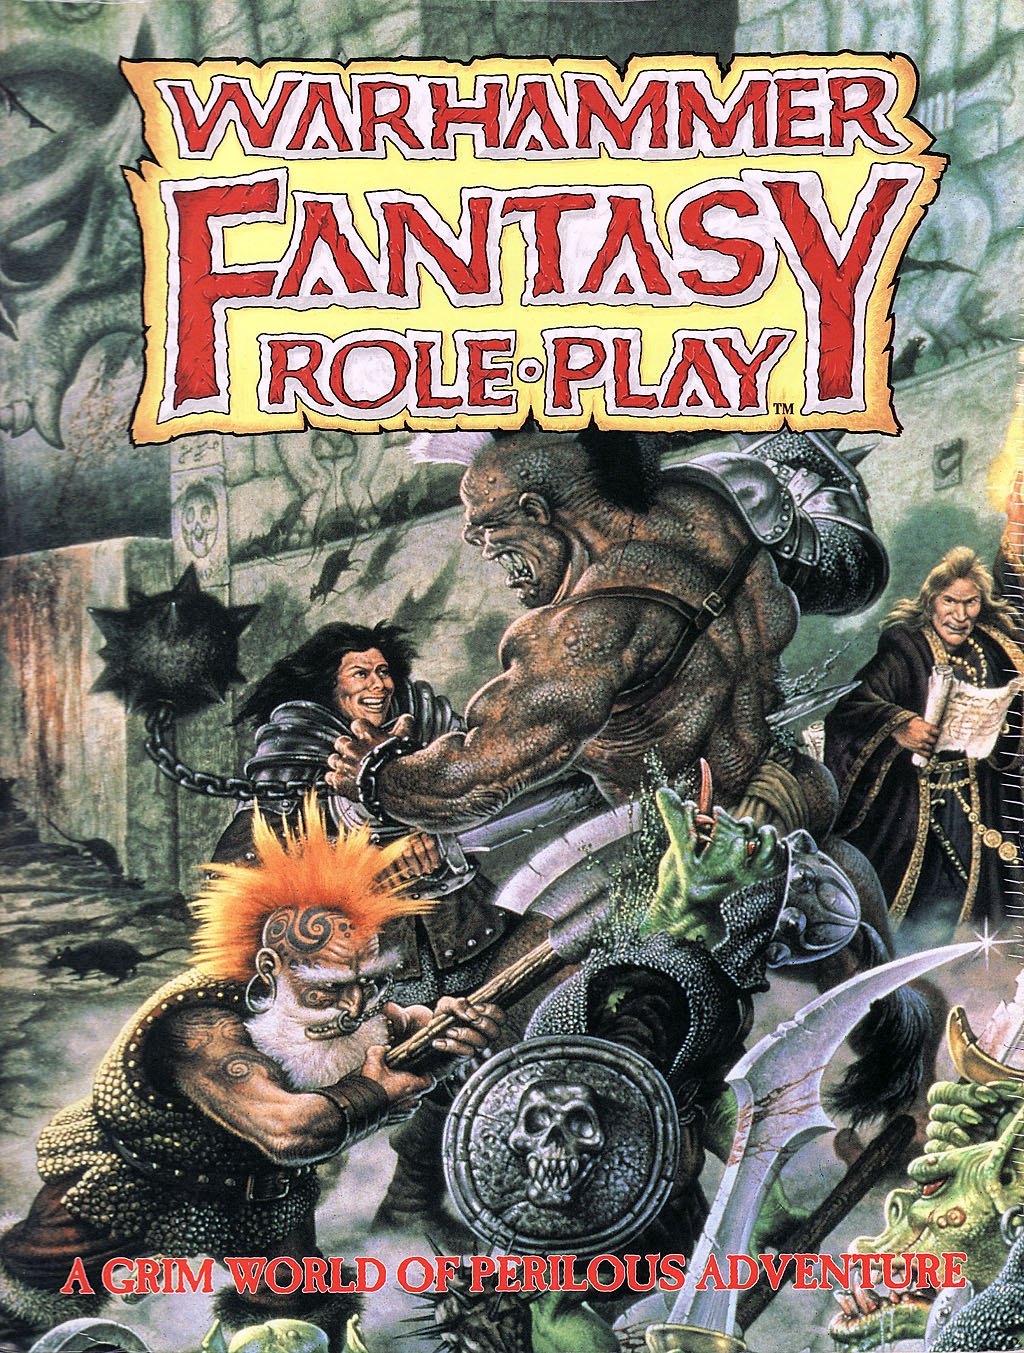 Warhammer Fantasy Roleplay | Gioco di Ruolo (GdR) | Tana dei Goblin